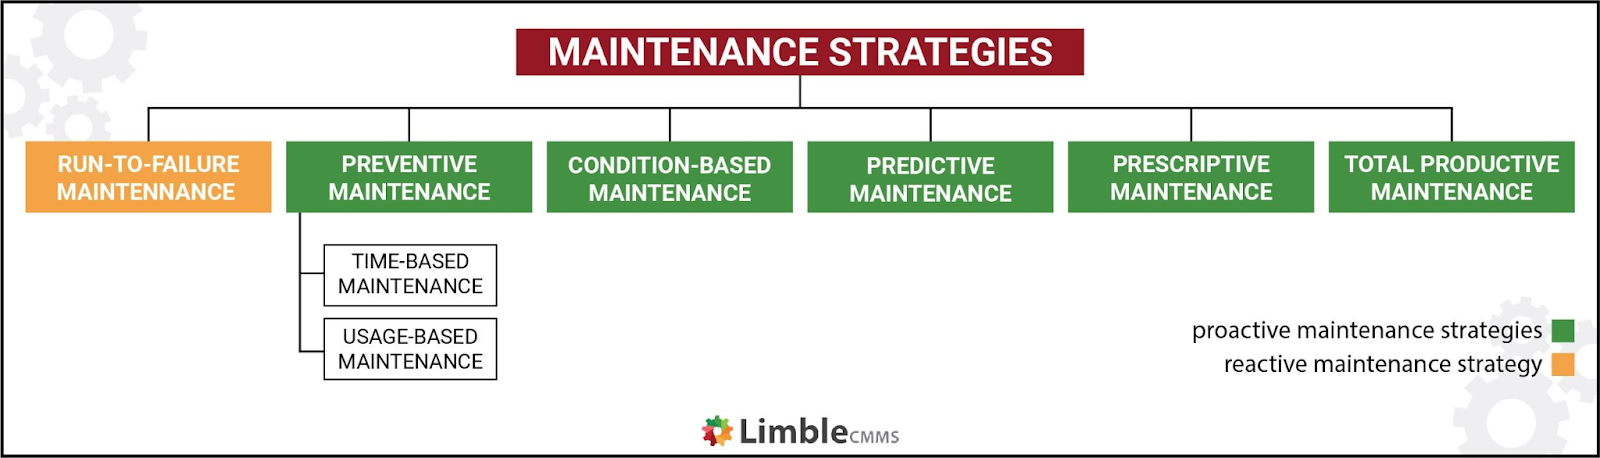 maintenance strategies